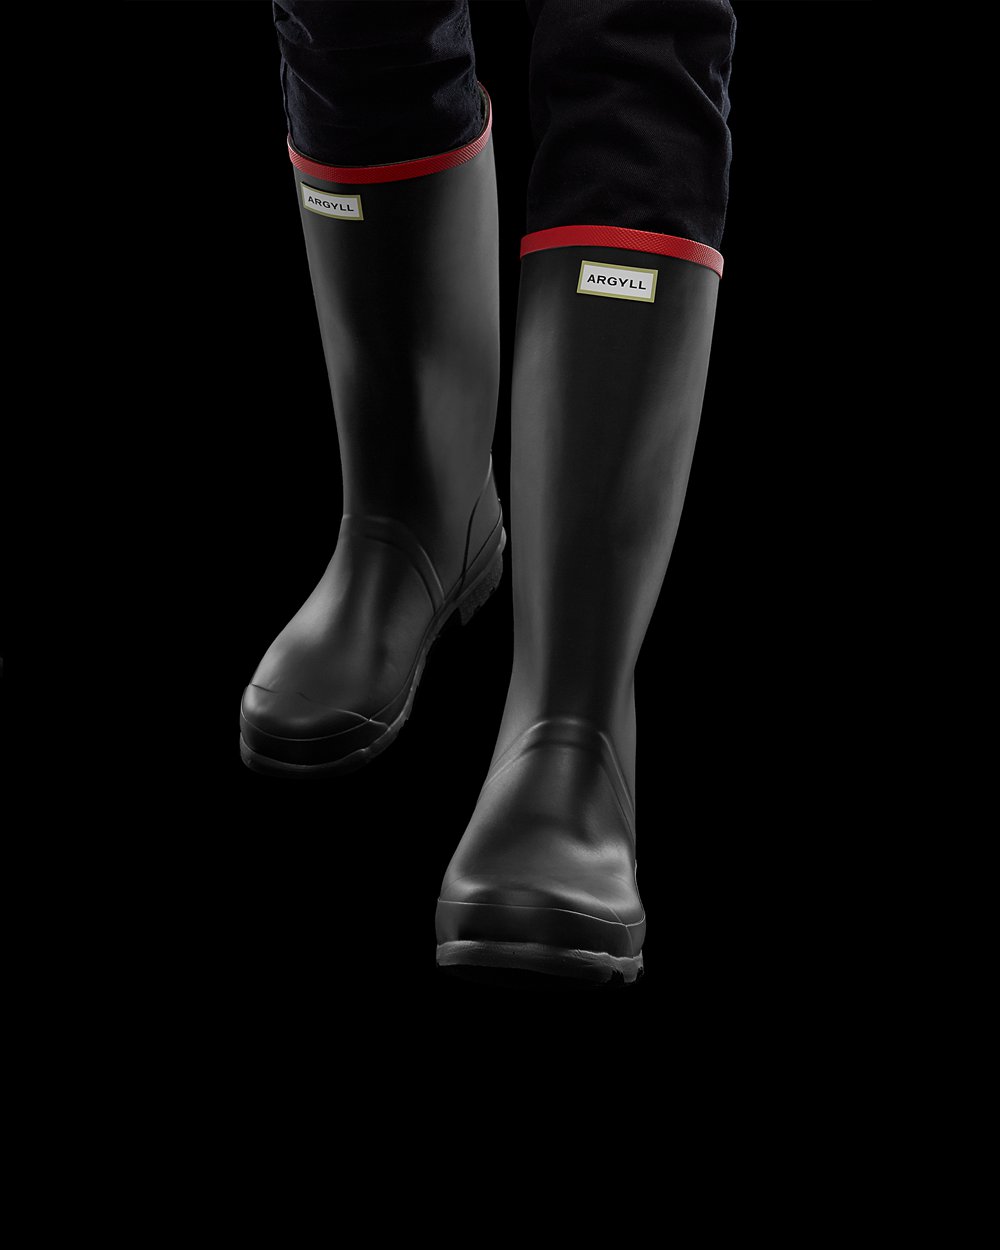 Womens Tall Rain Boots - Hunter Argyll Full Knee (37DUYGCIE) - Black